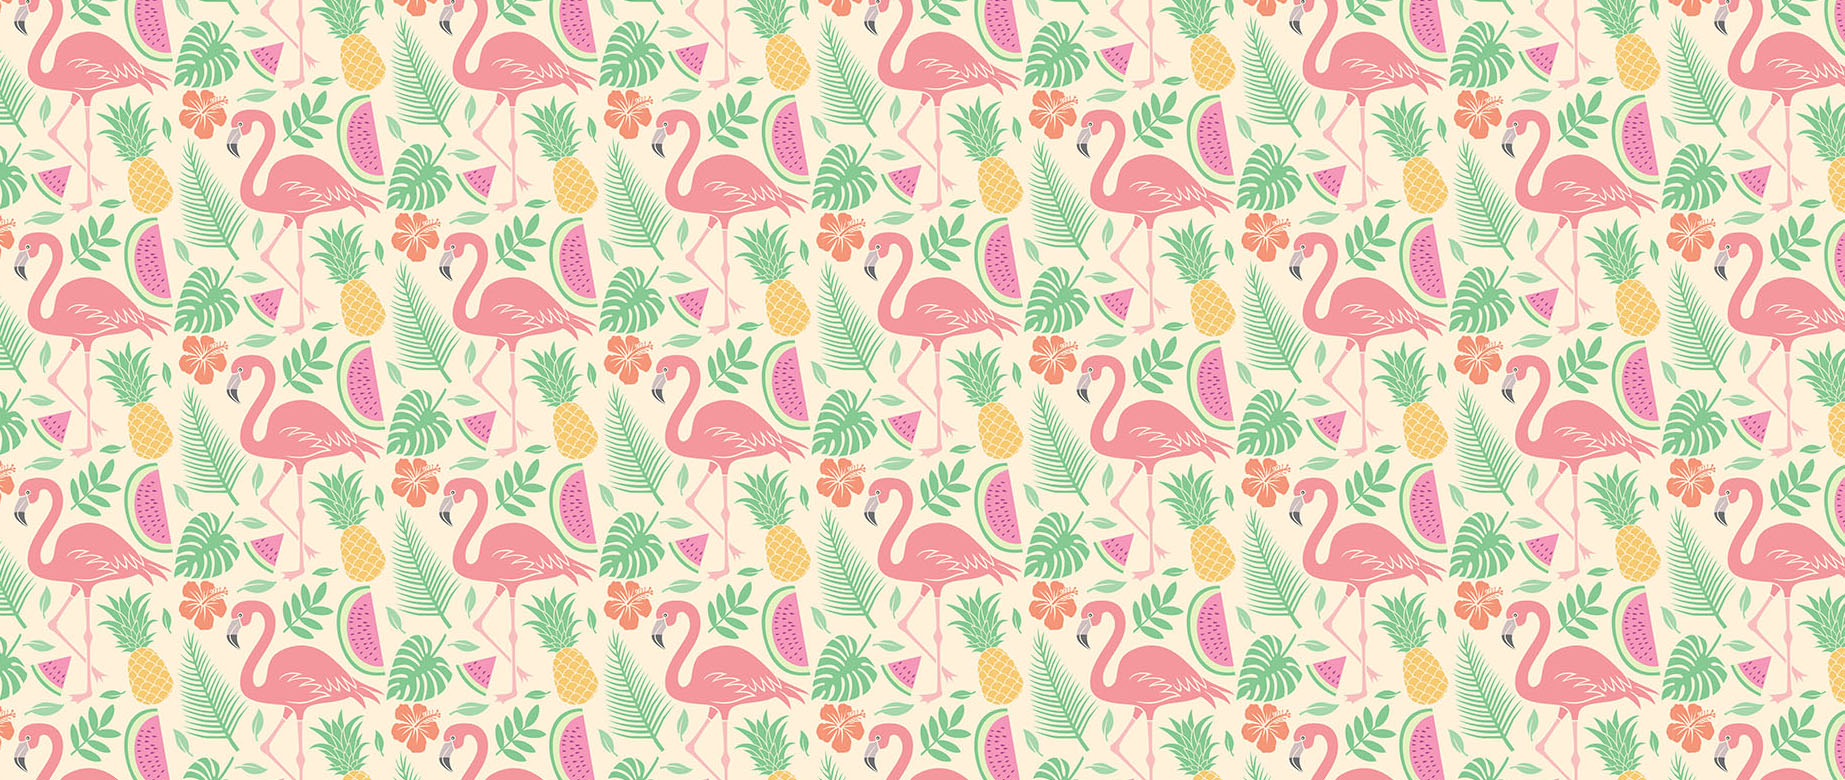 flamingo-watermelon-pineapple-wallpaper-seamless-repeat-view